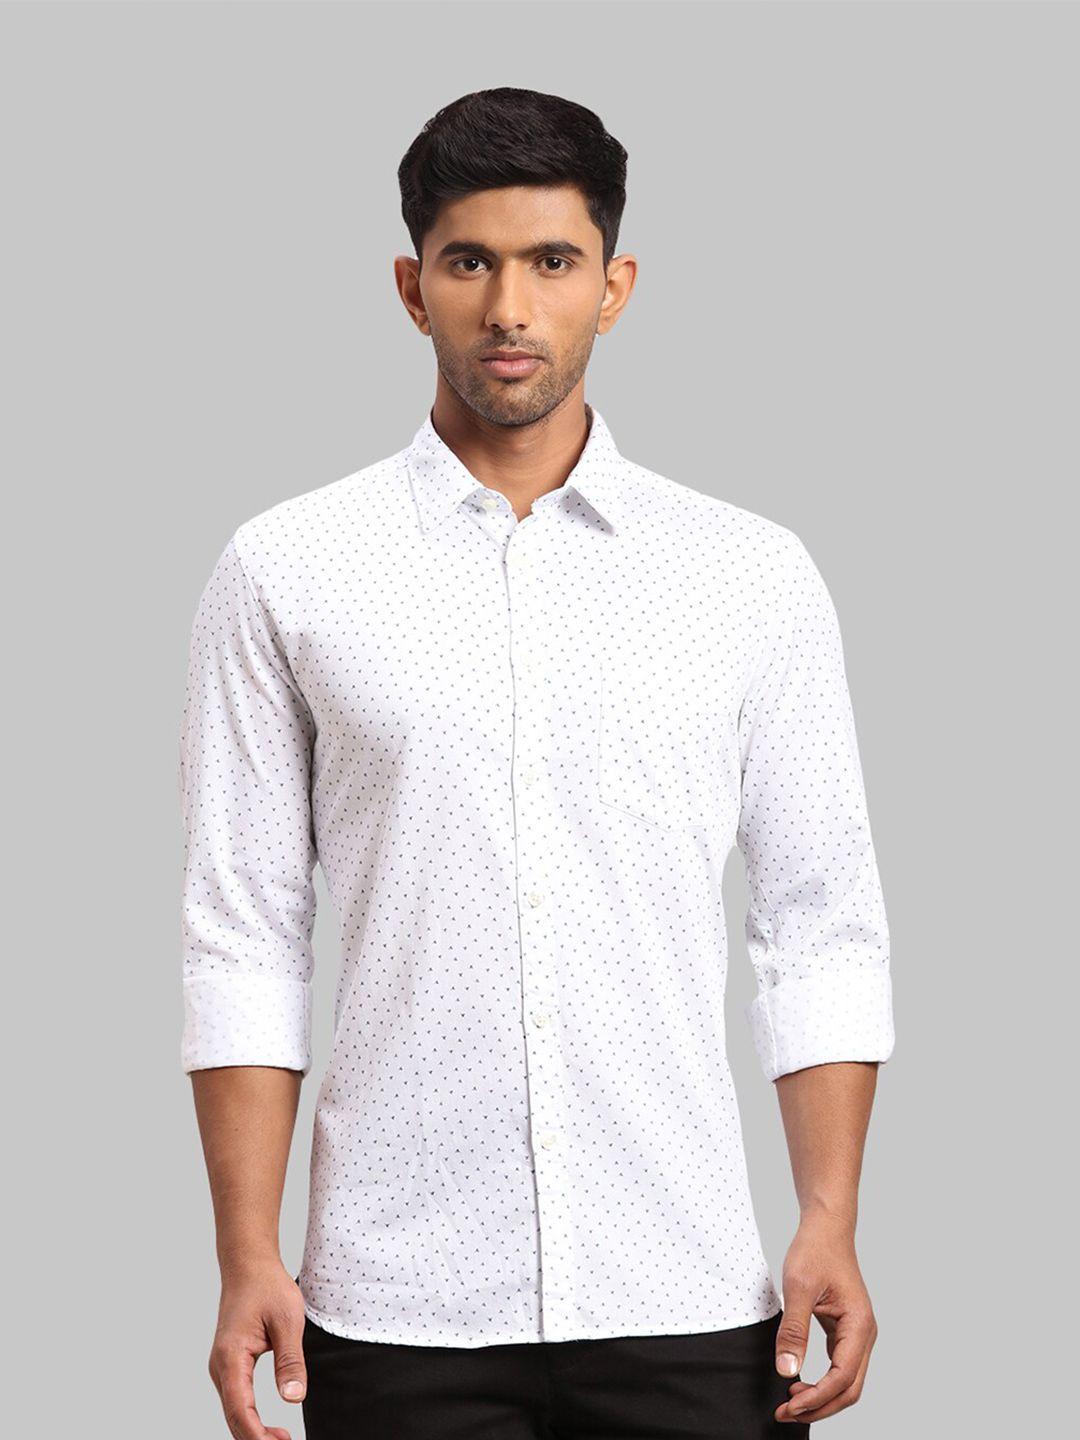 parx-men-slim-fit-cotton-printed-casual-shirt